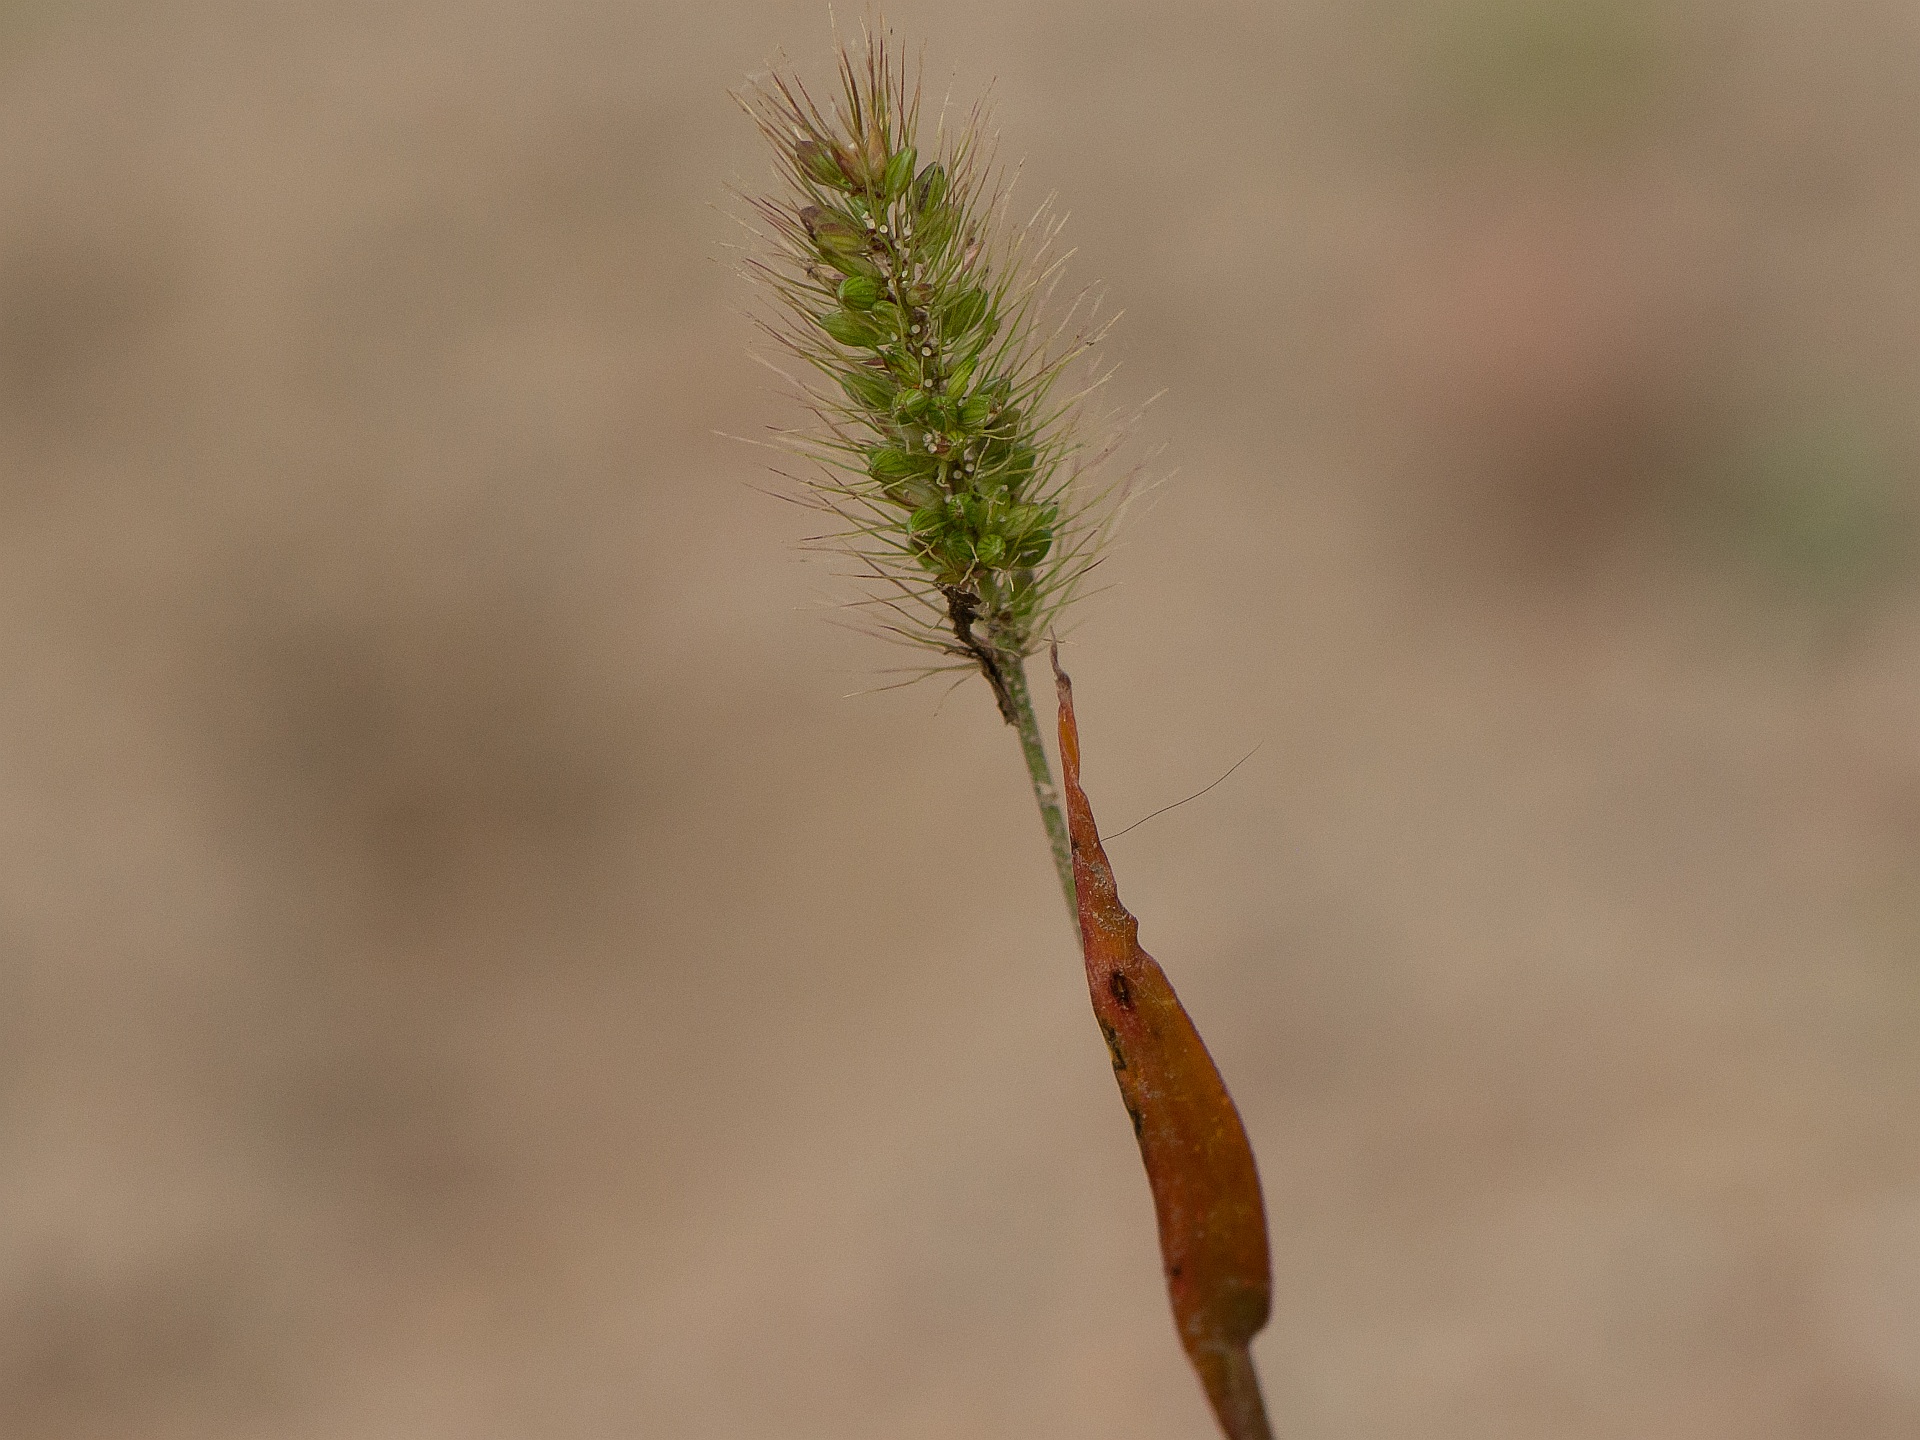 Setaria viridis (L.) P.Beauv.